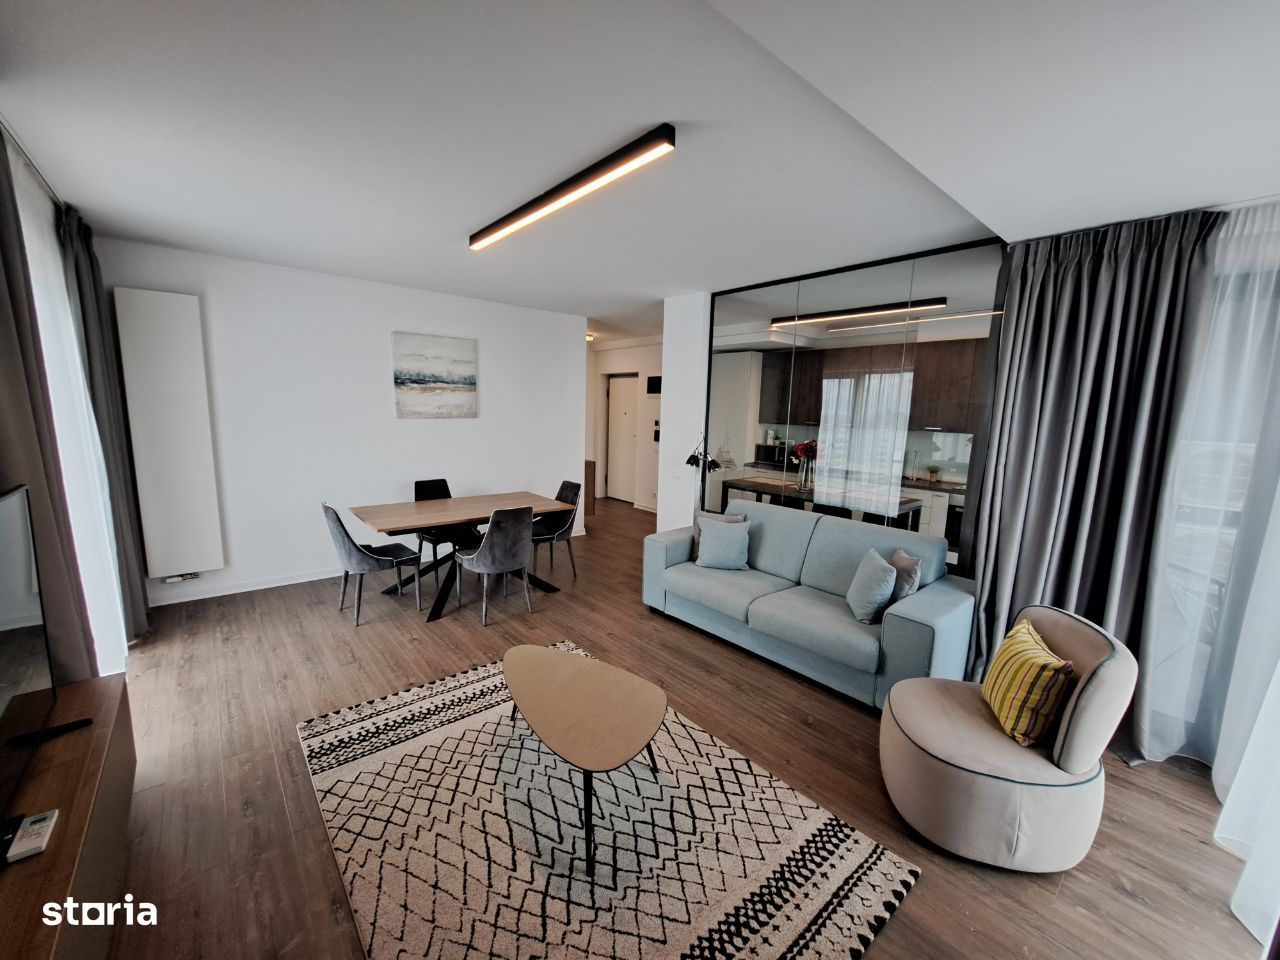 Vânzare apartament modern situat în complexul rezidential Cloud 9